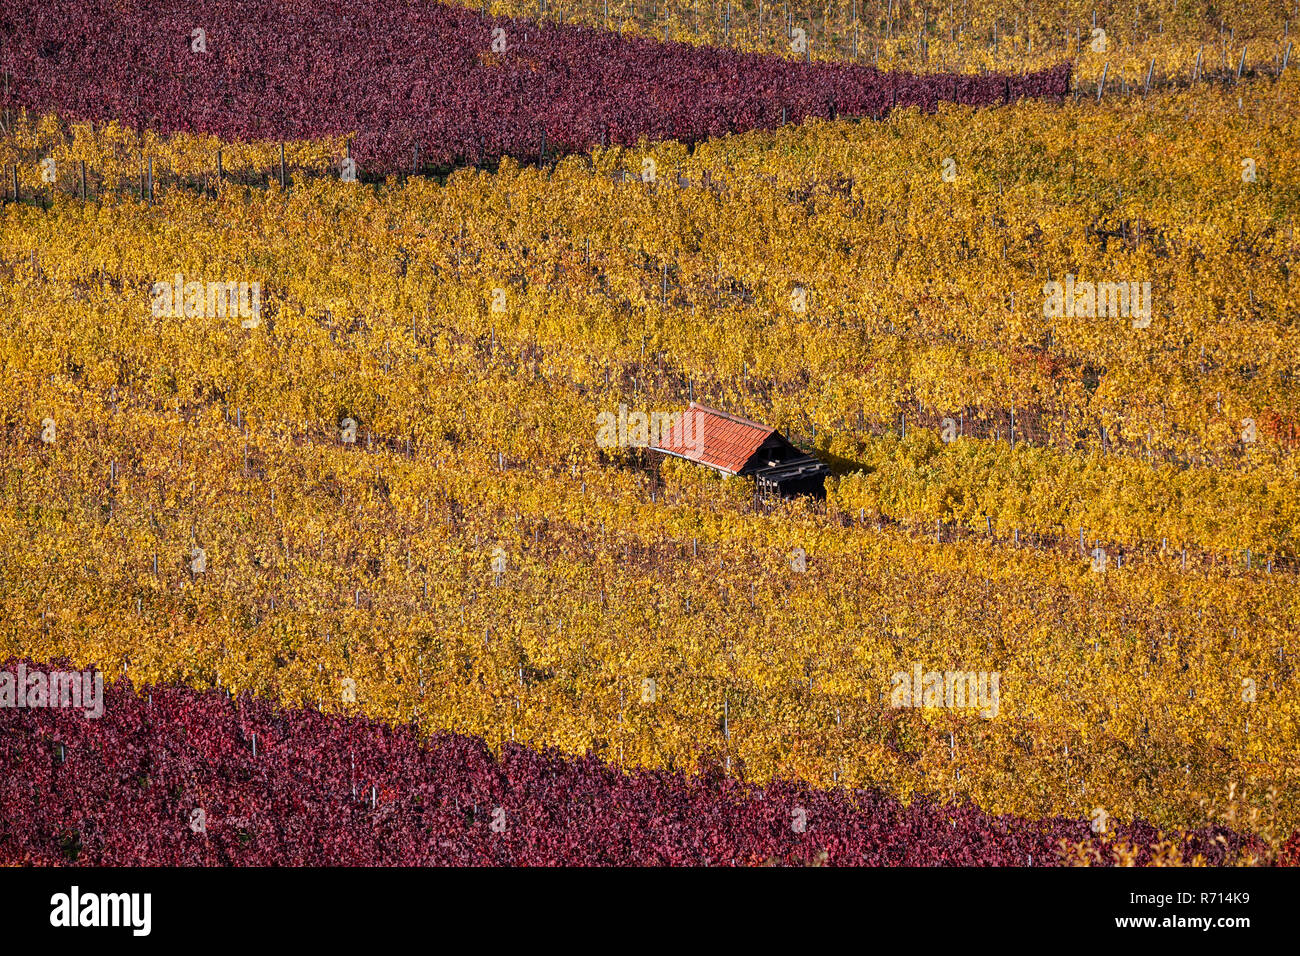 Viniculture, vineyard with vines, autumn colouring, Schriesheim, Baden-Württemberg, Germany Stock Photo